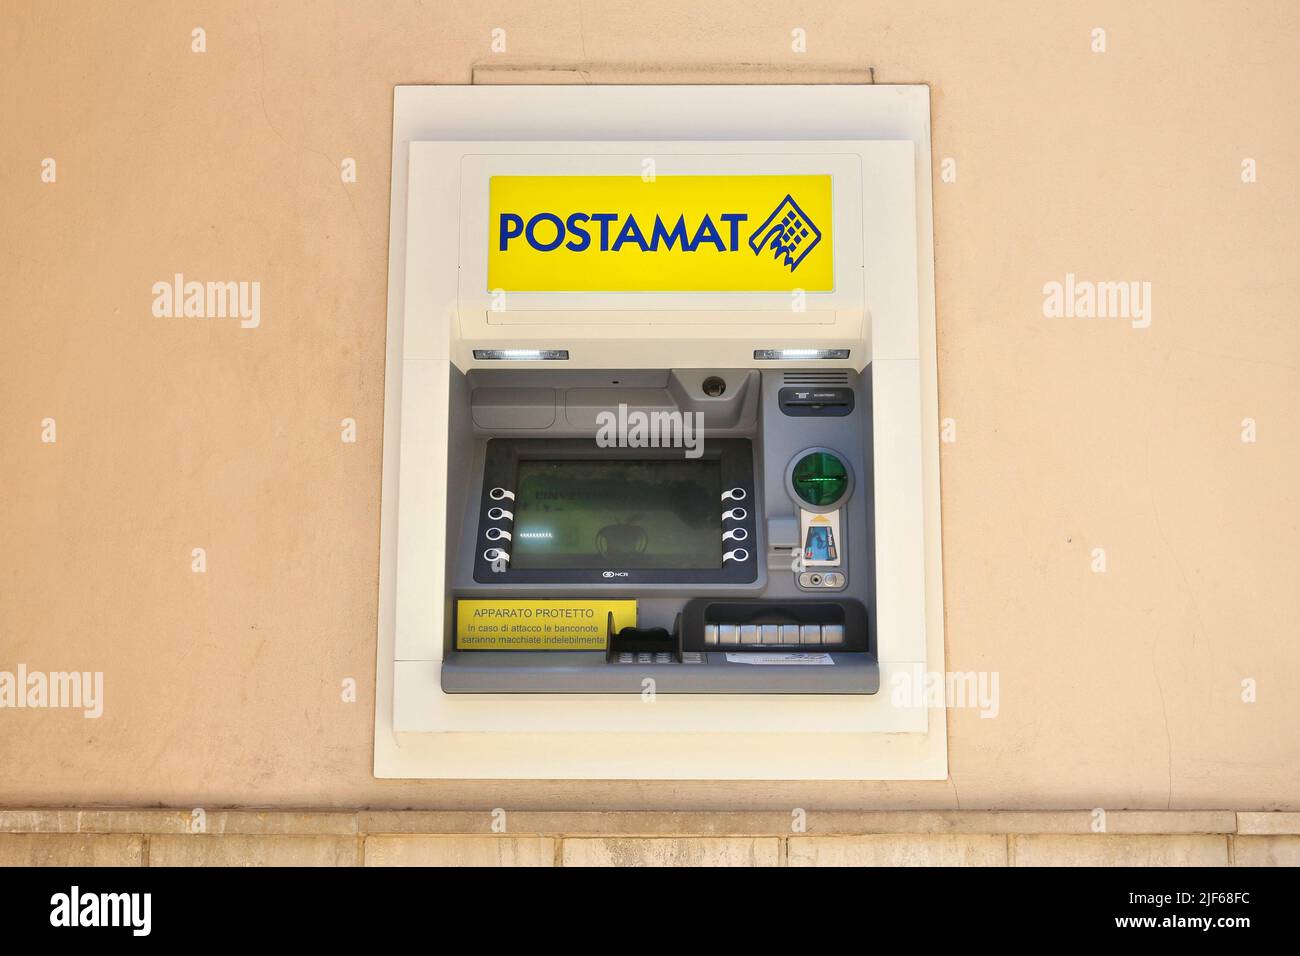 NARDO, ITALY - MAY 30, 2017: Postamat ATM in Nardo, Italy. Postamat ATMs are operated by BancoPosta, part of Poste Italiane (Italian Post). Stock Photo